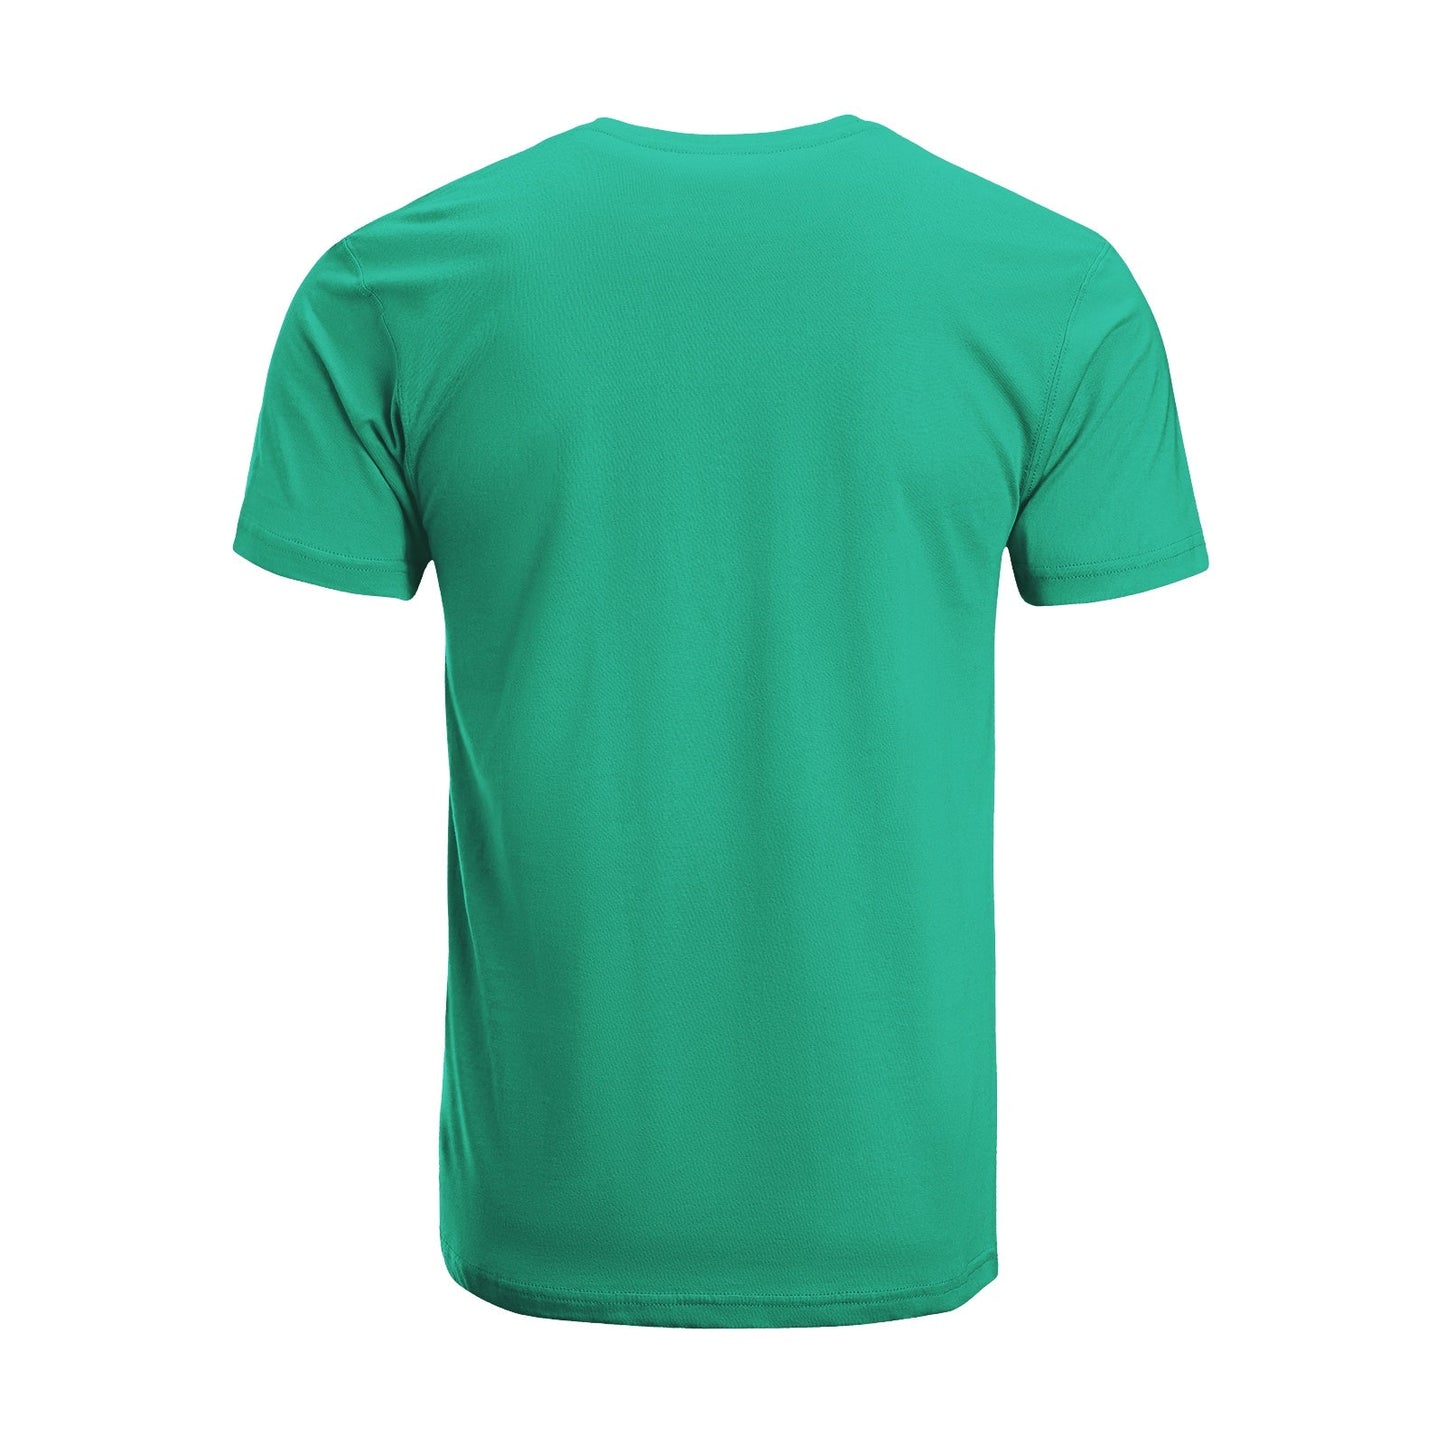 Unisex Short Sleeve Crew Neck Cotton Jersey T-Shirt MOM 28